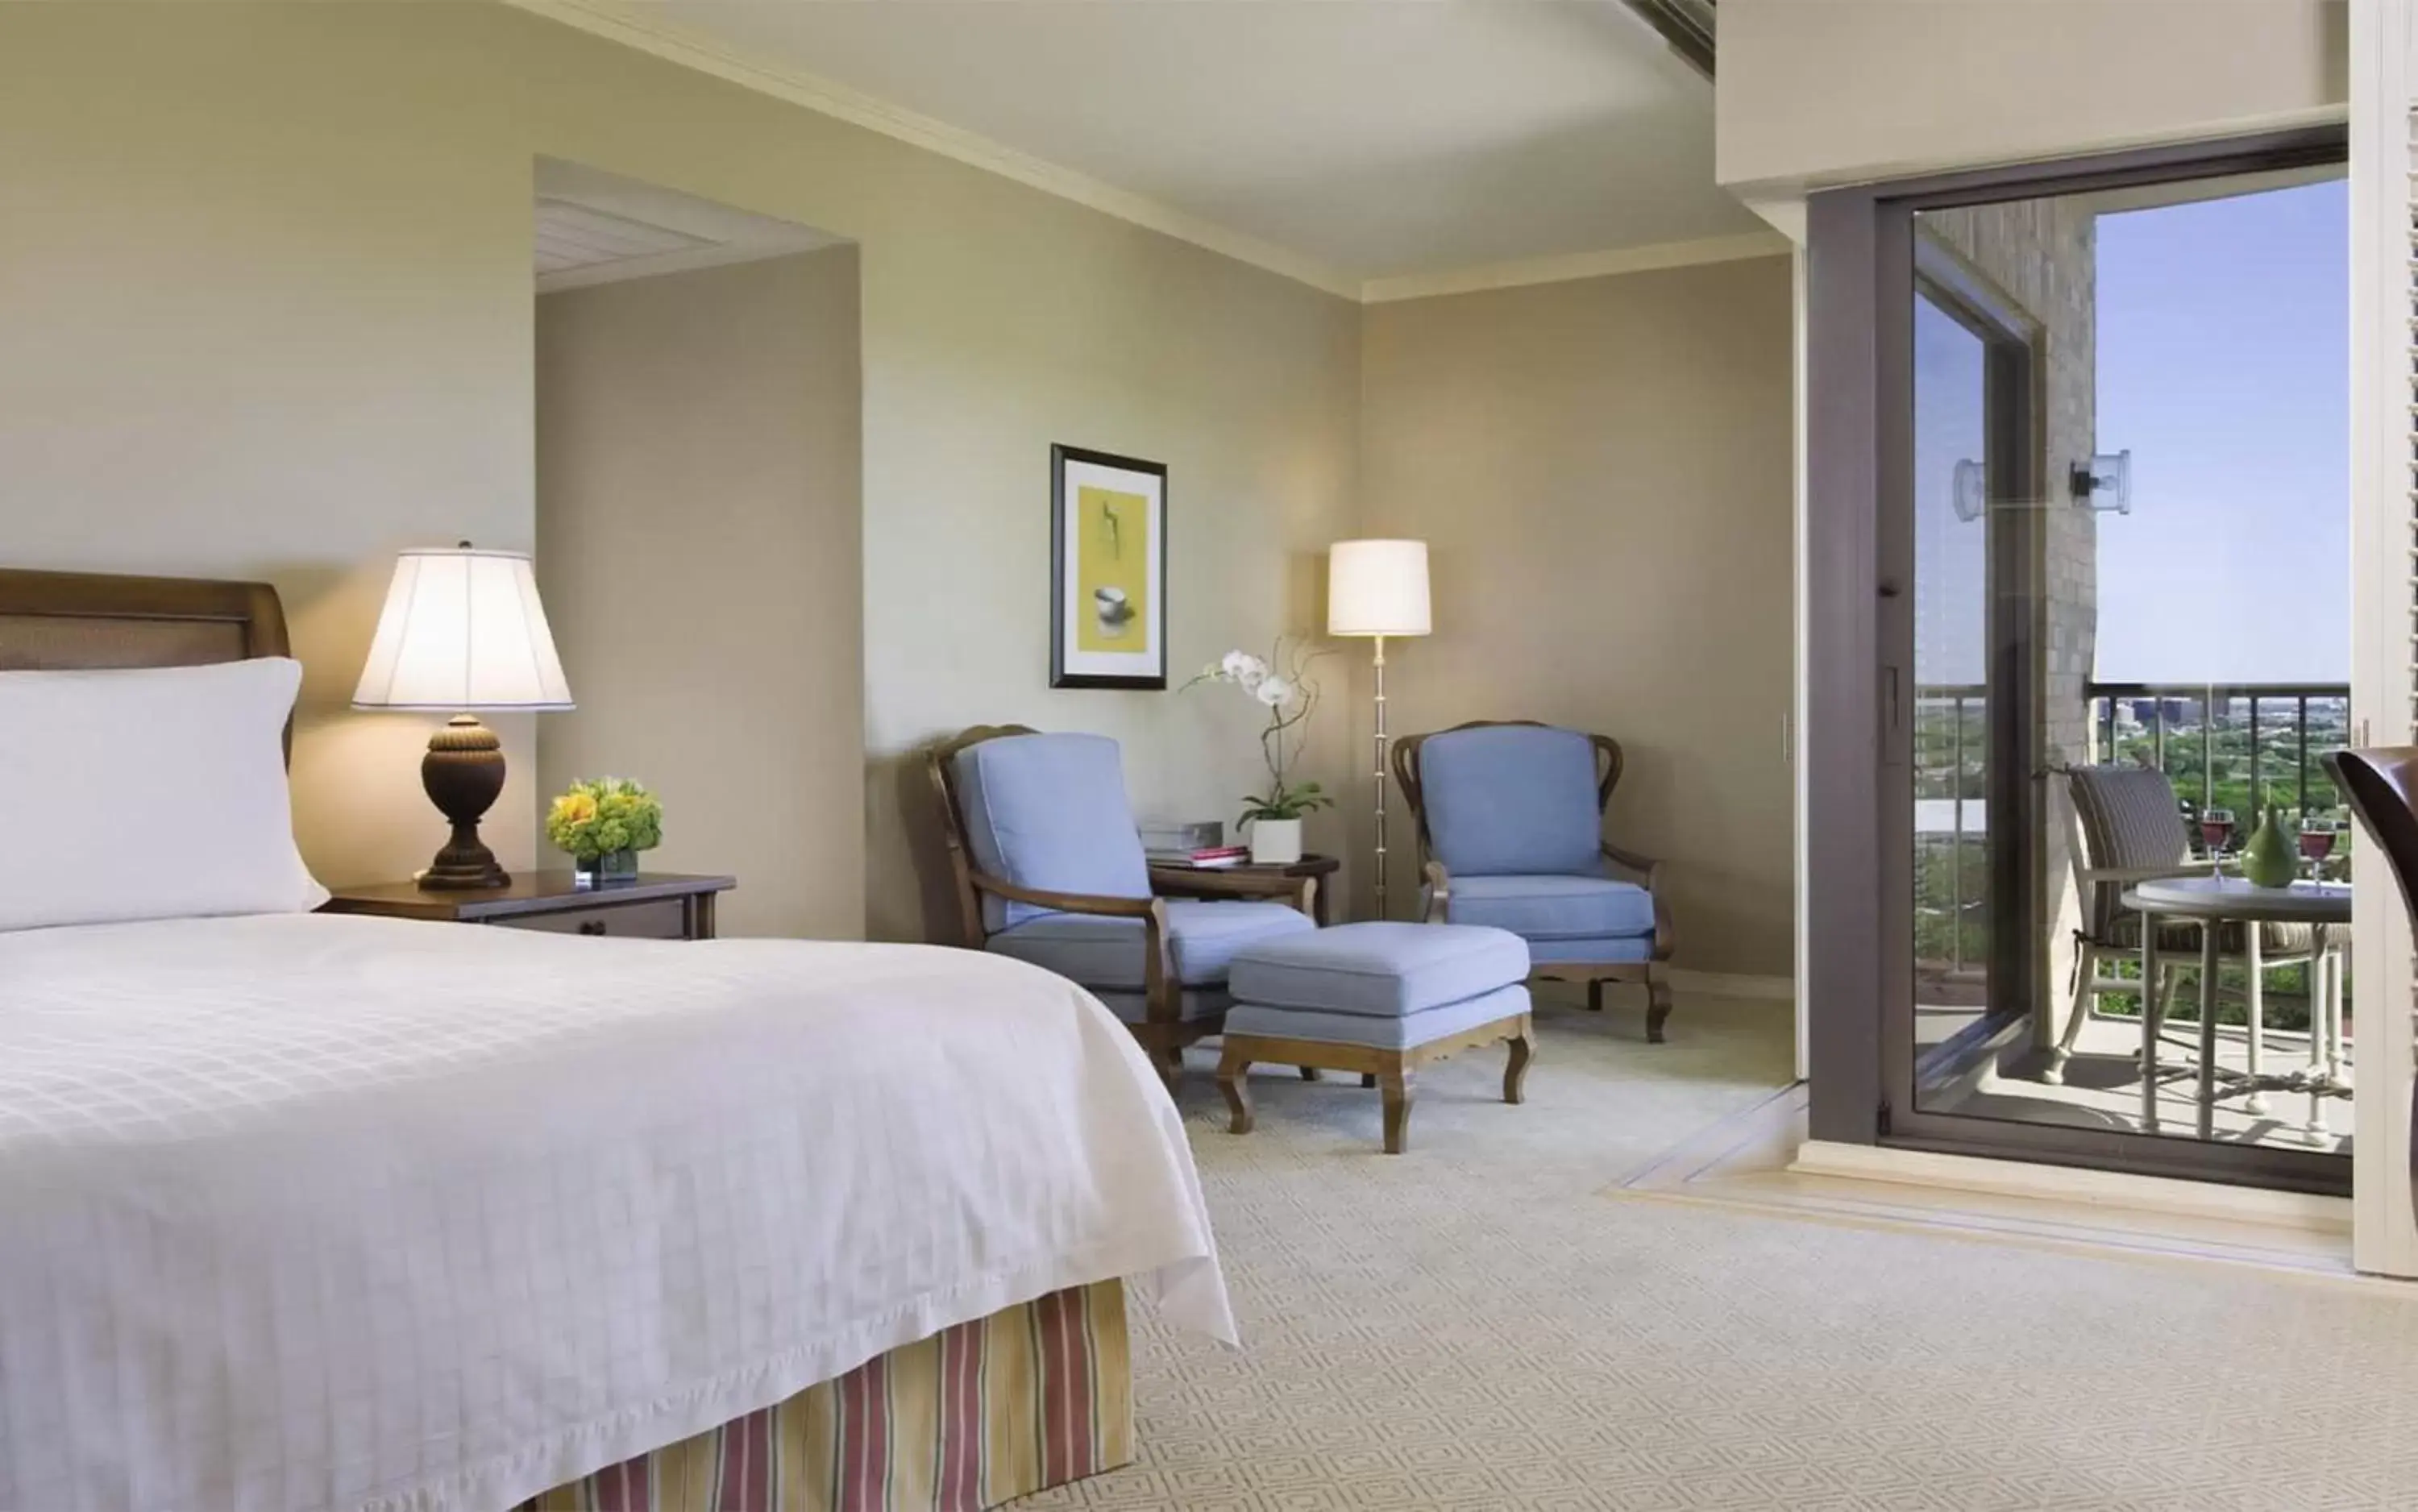 Corner Guest Room with Inland View in The Las Colinas Resort, Dallas